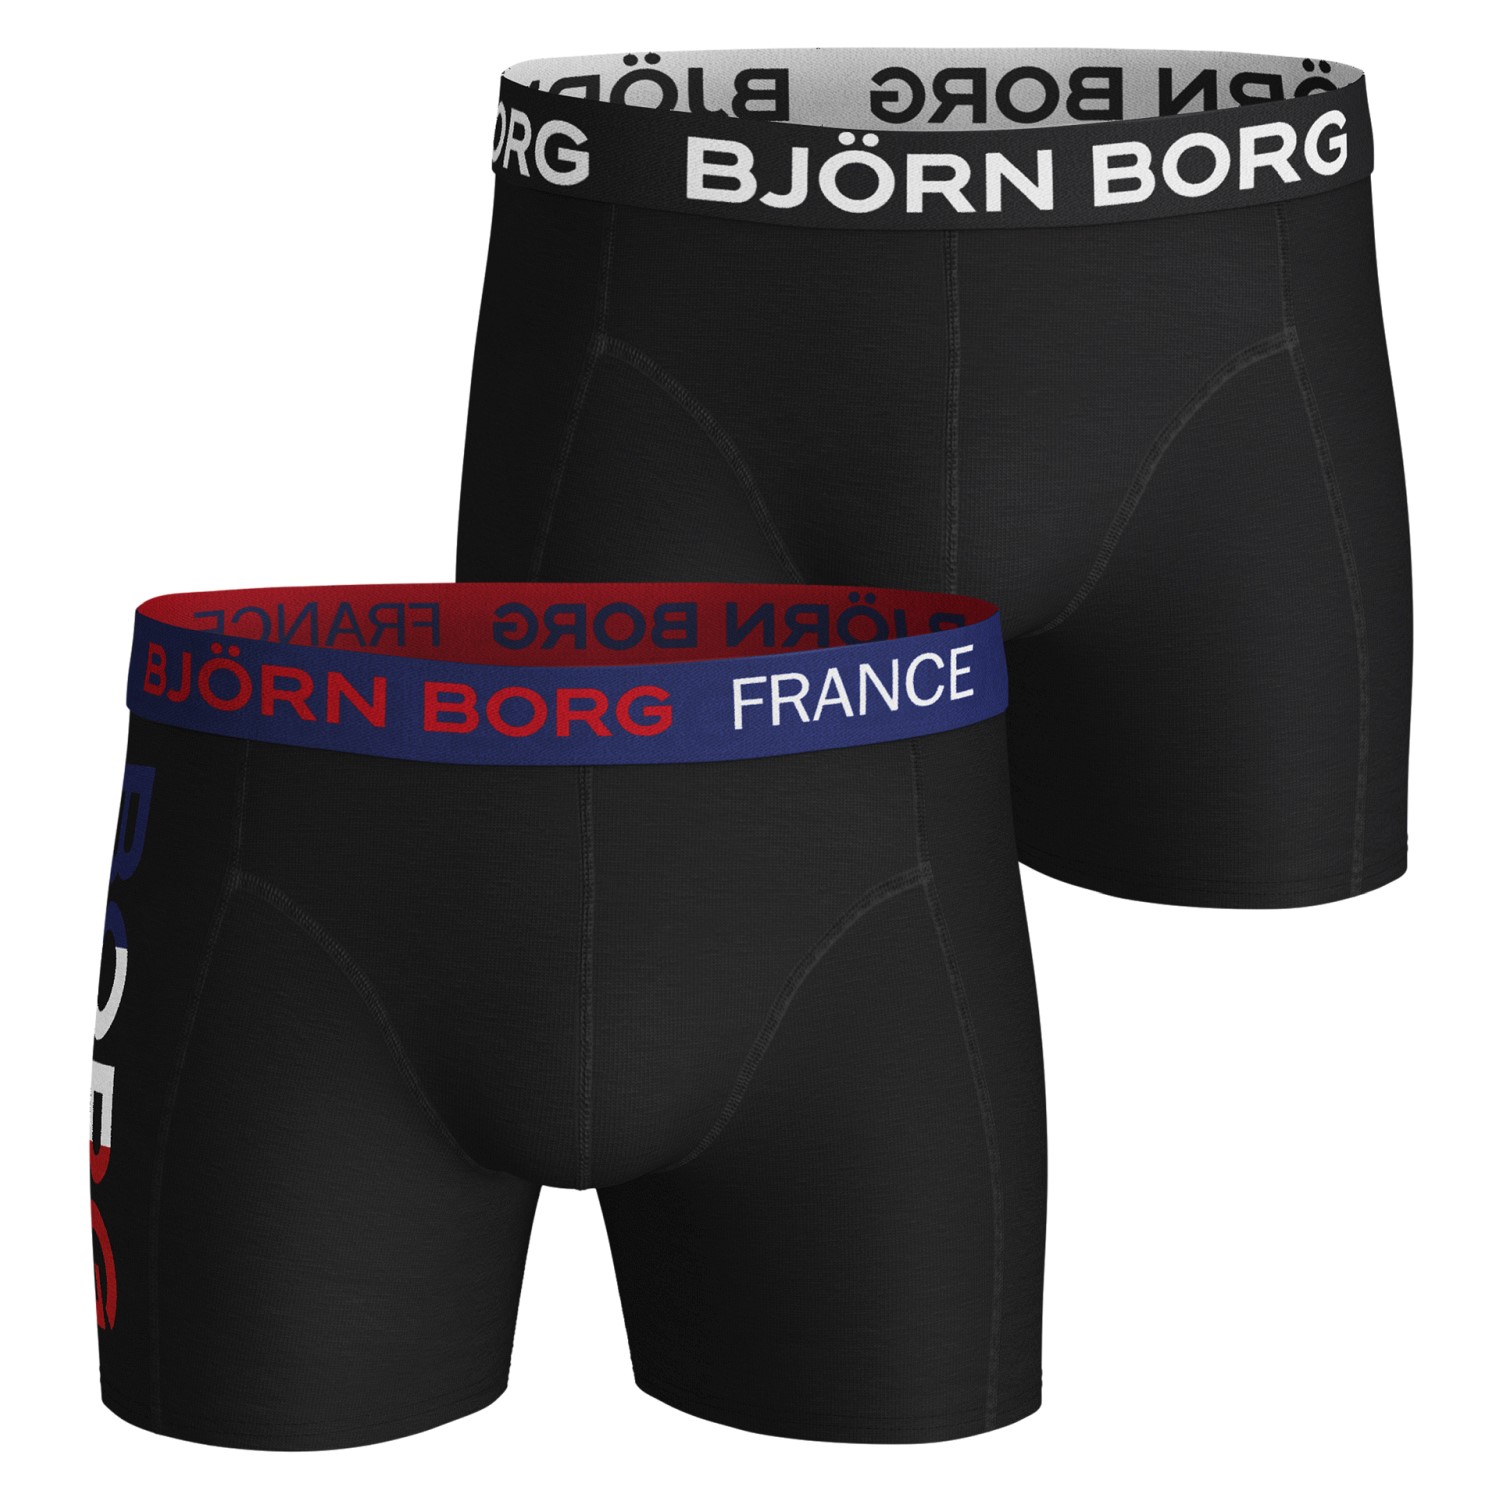 Björn Borg Nations Cotton Stretch Shorts France